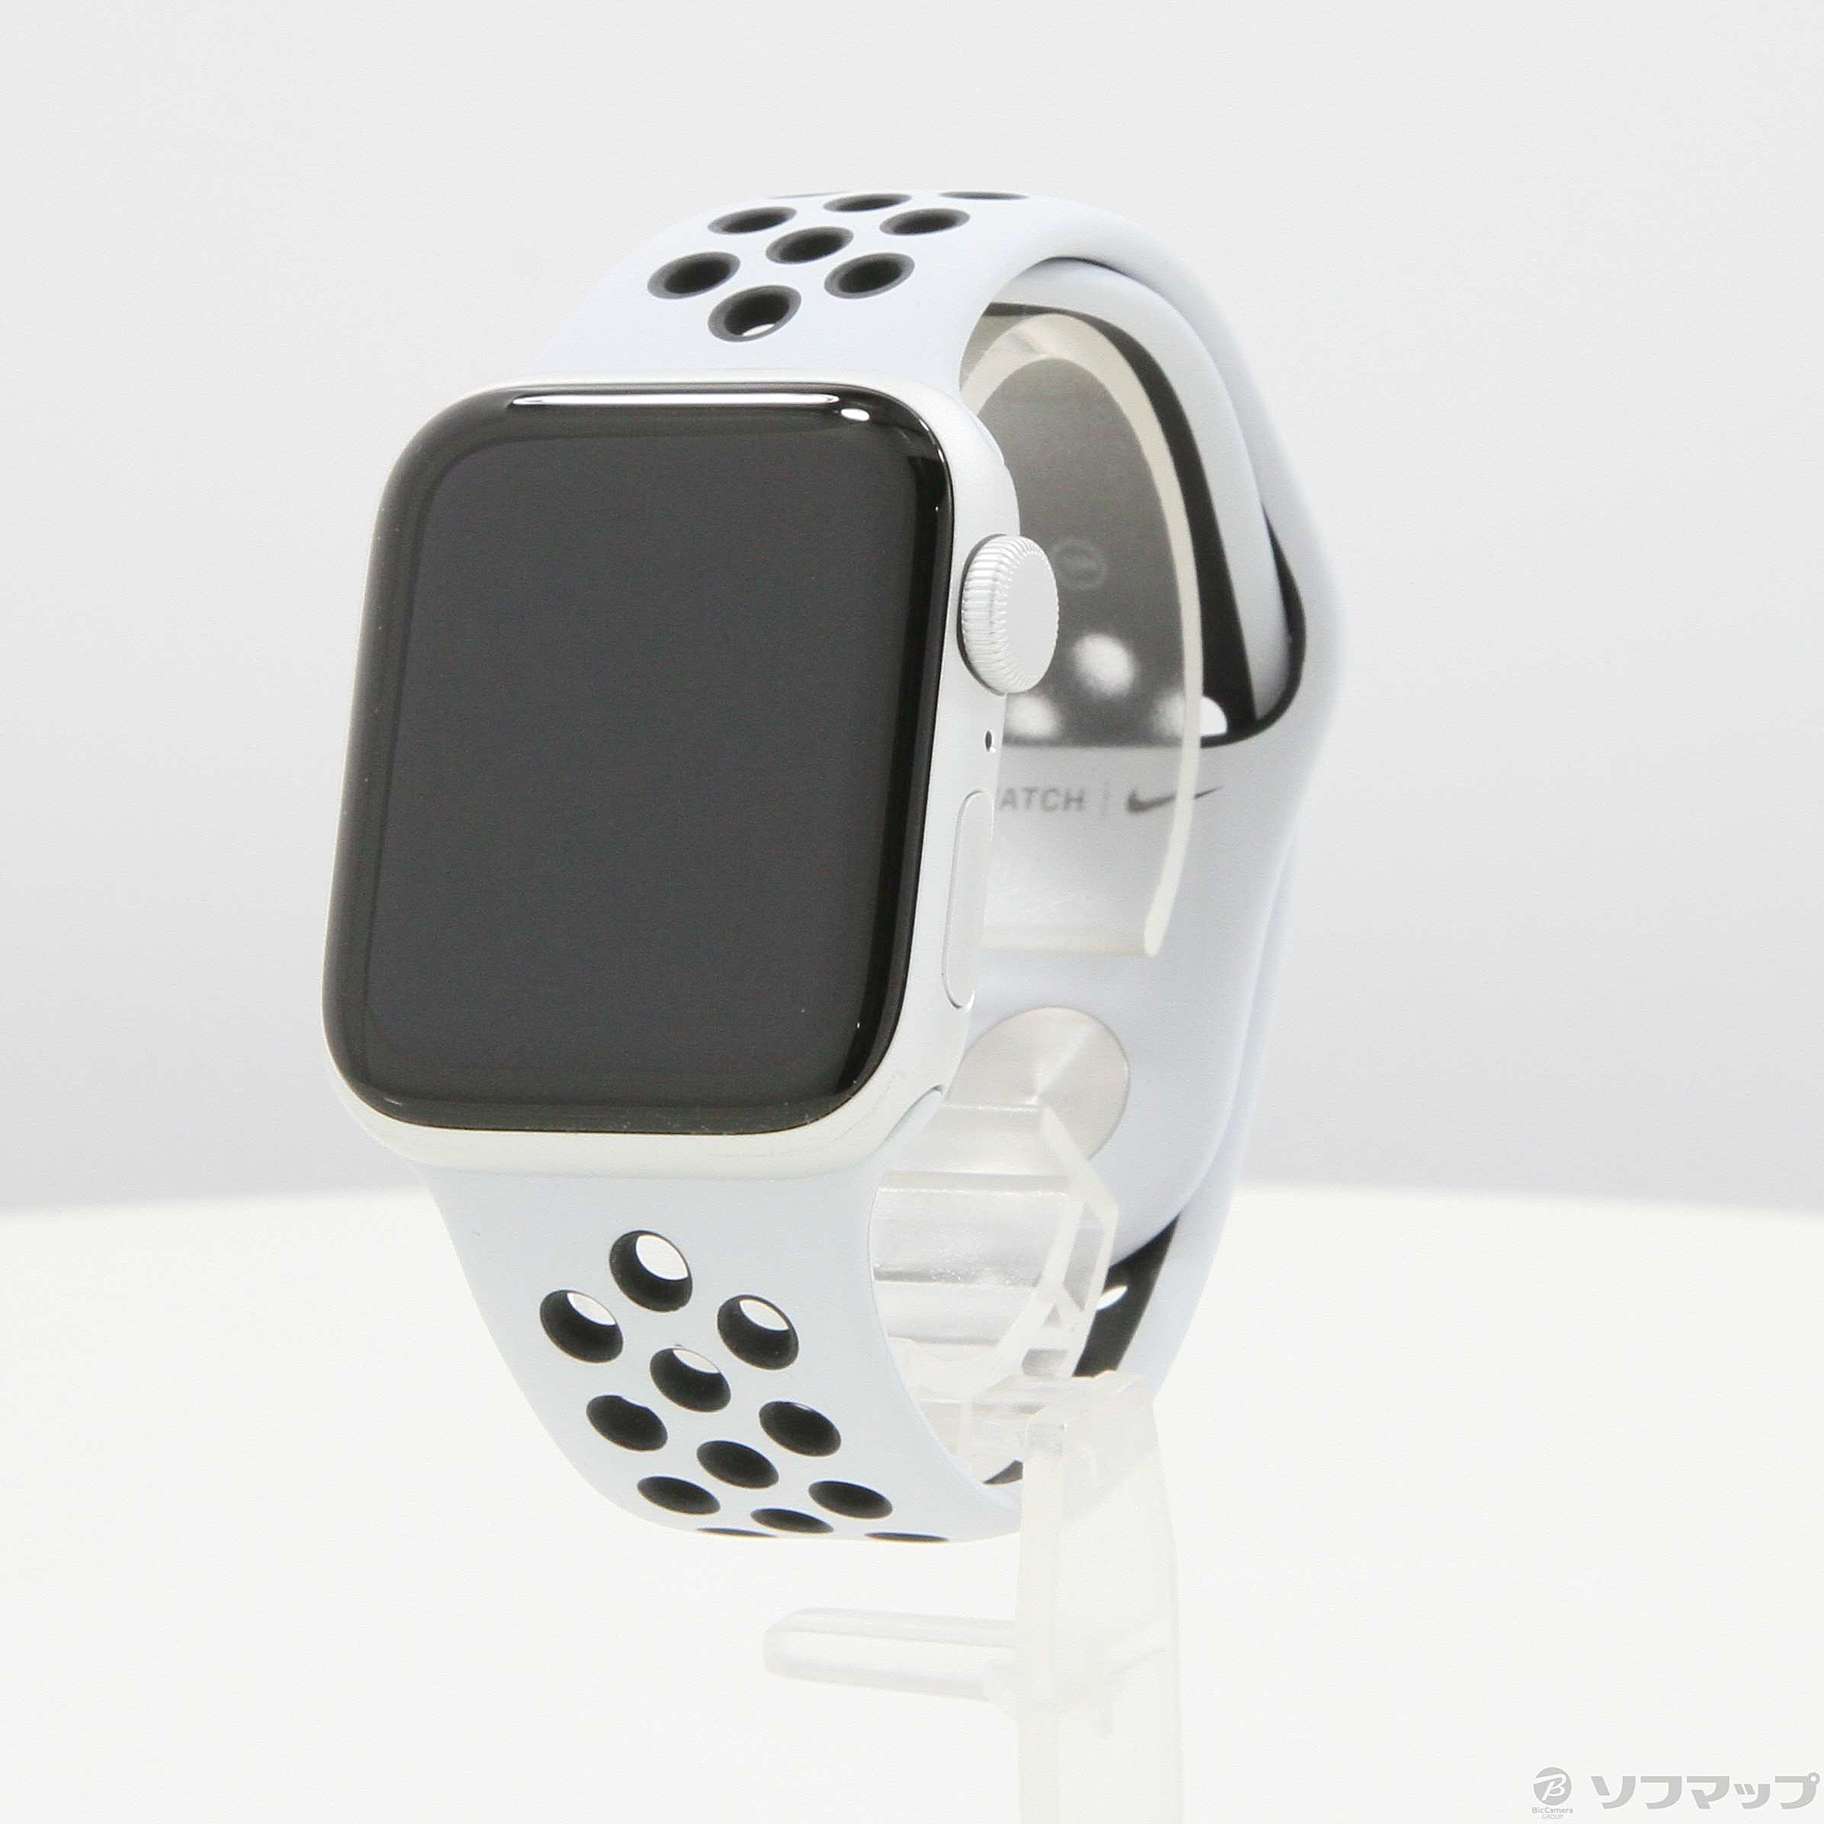 MKQ23J/A  Apple Watch Nike SE GPSモデル 40